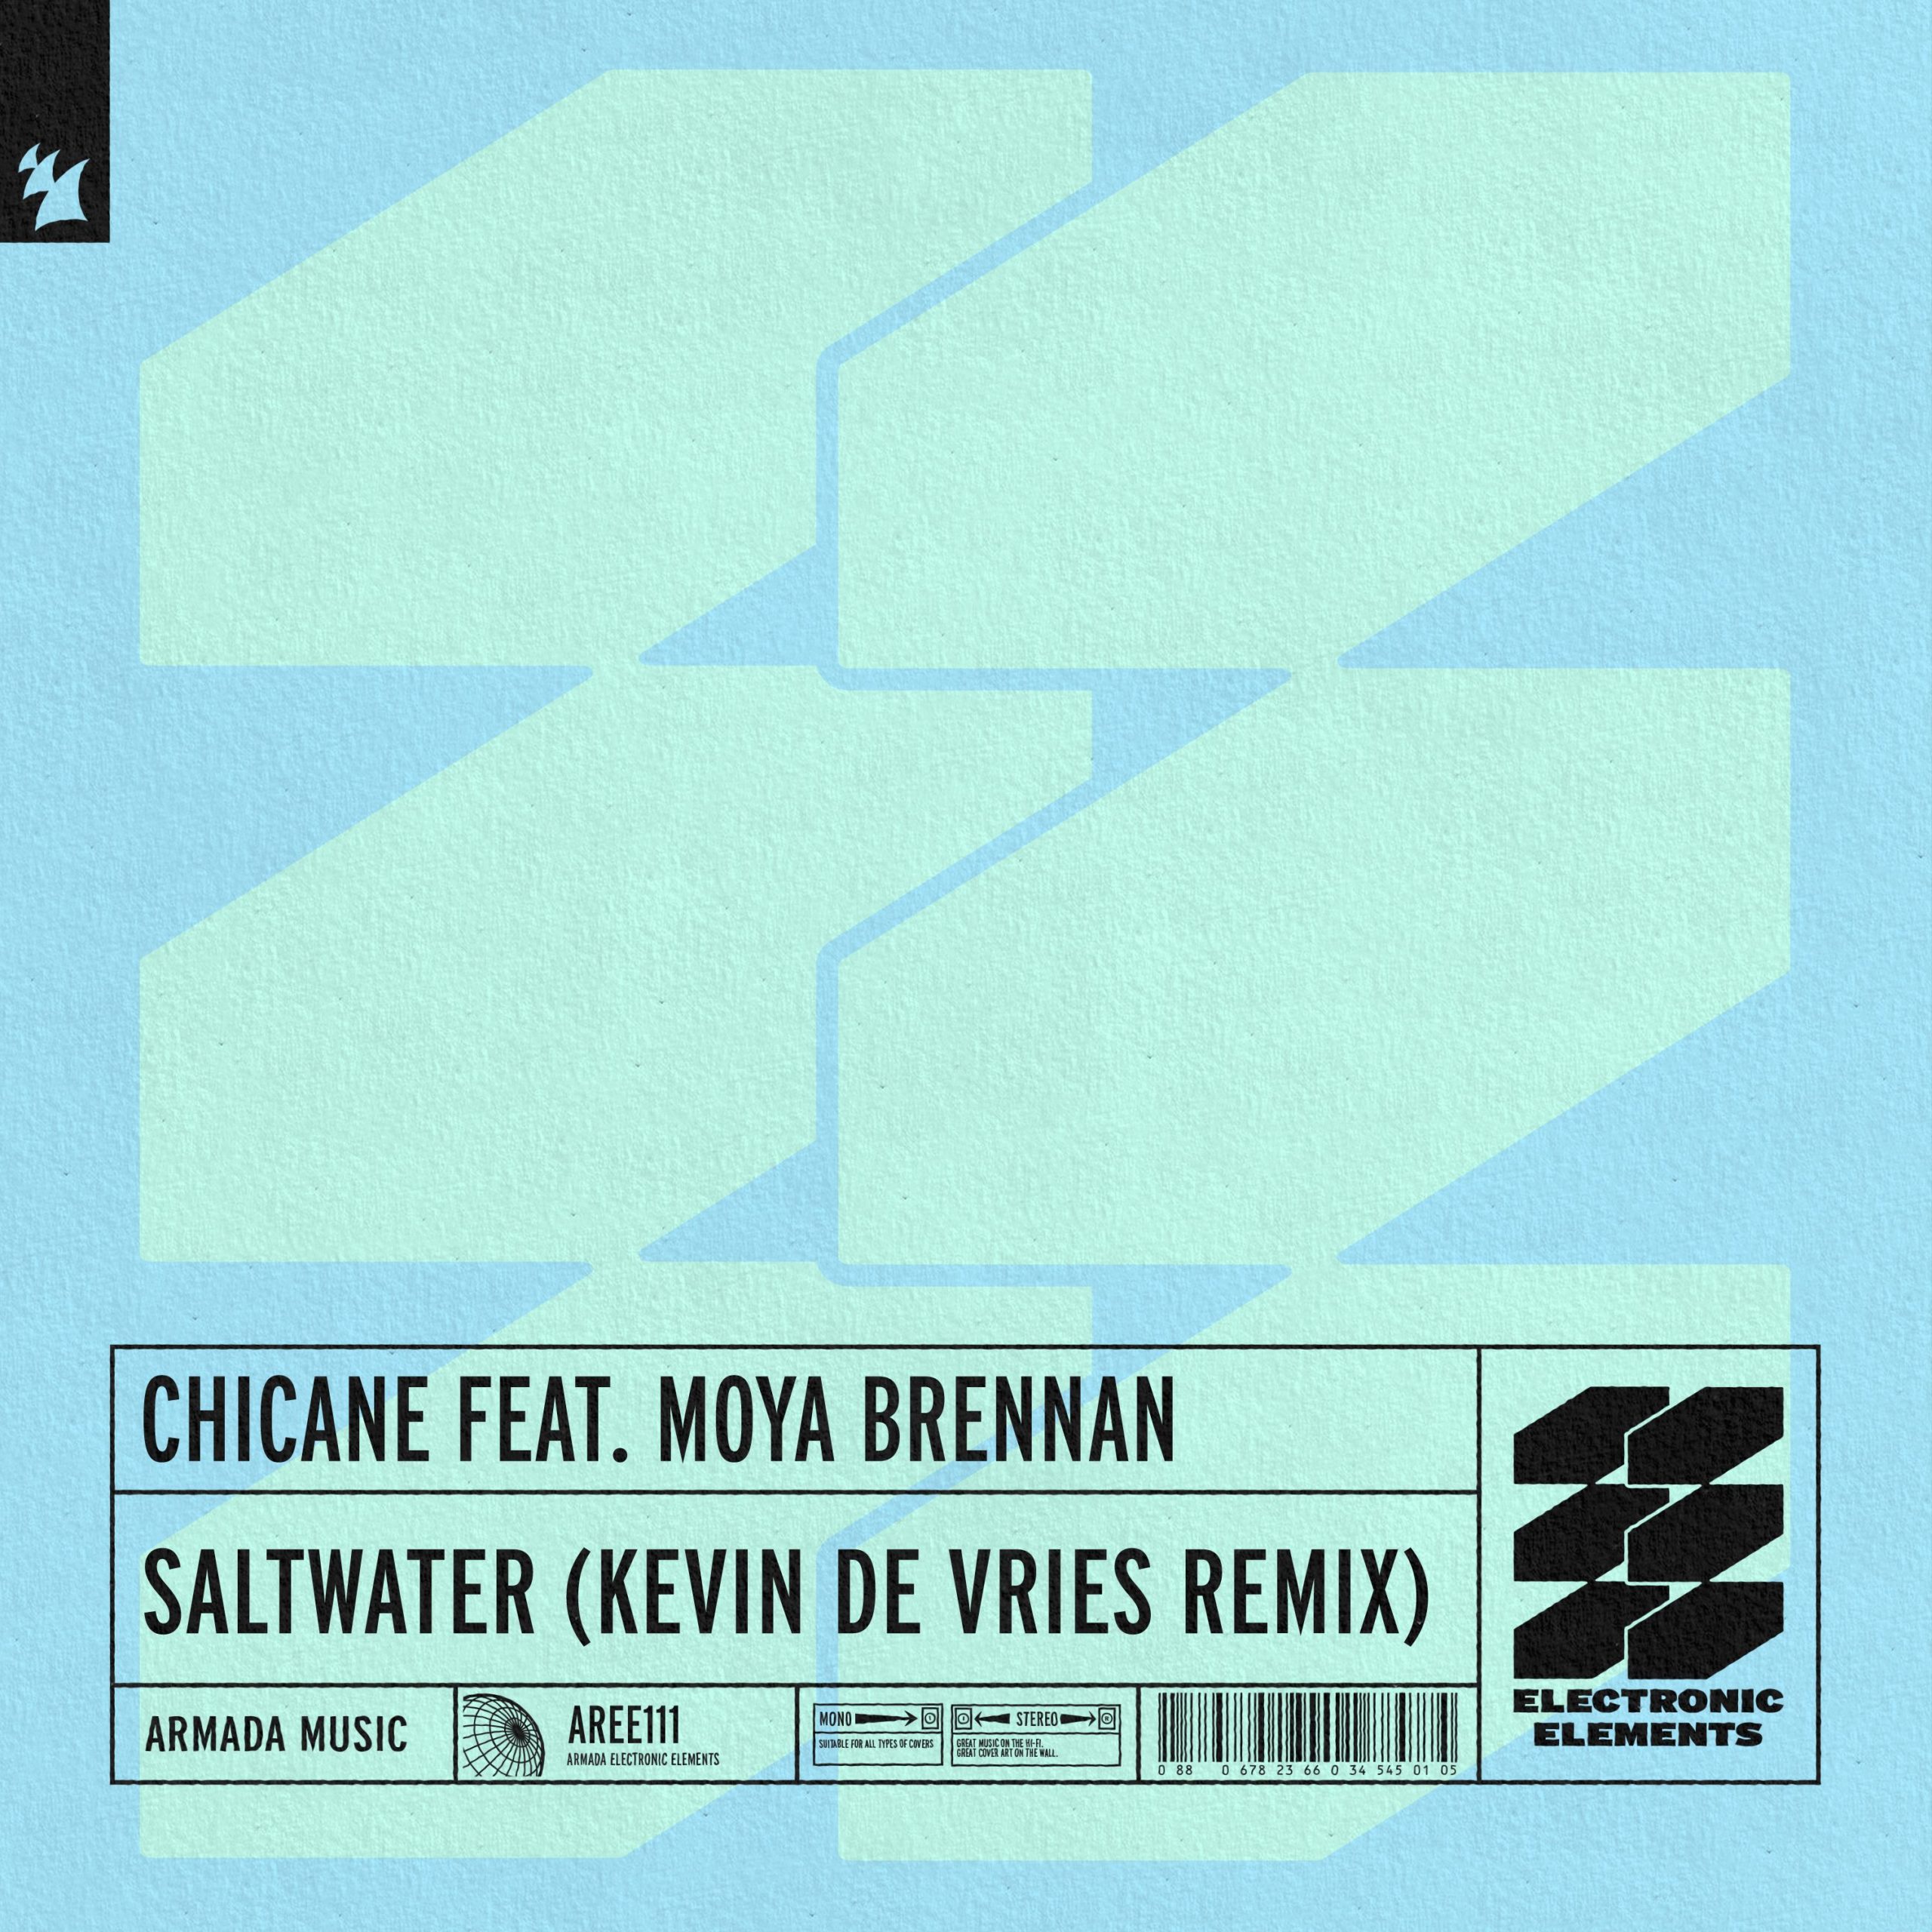 Chicane feat. Moya Brennan presents Saltwater (Kevin de Vries Remix) on Armada Music